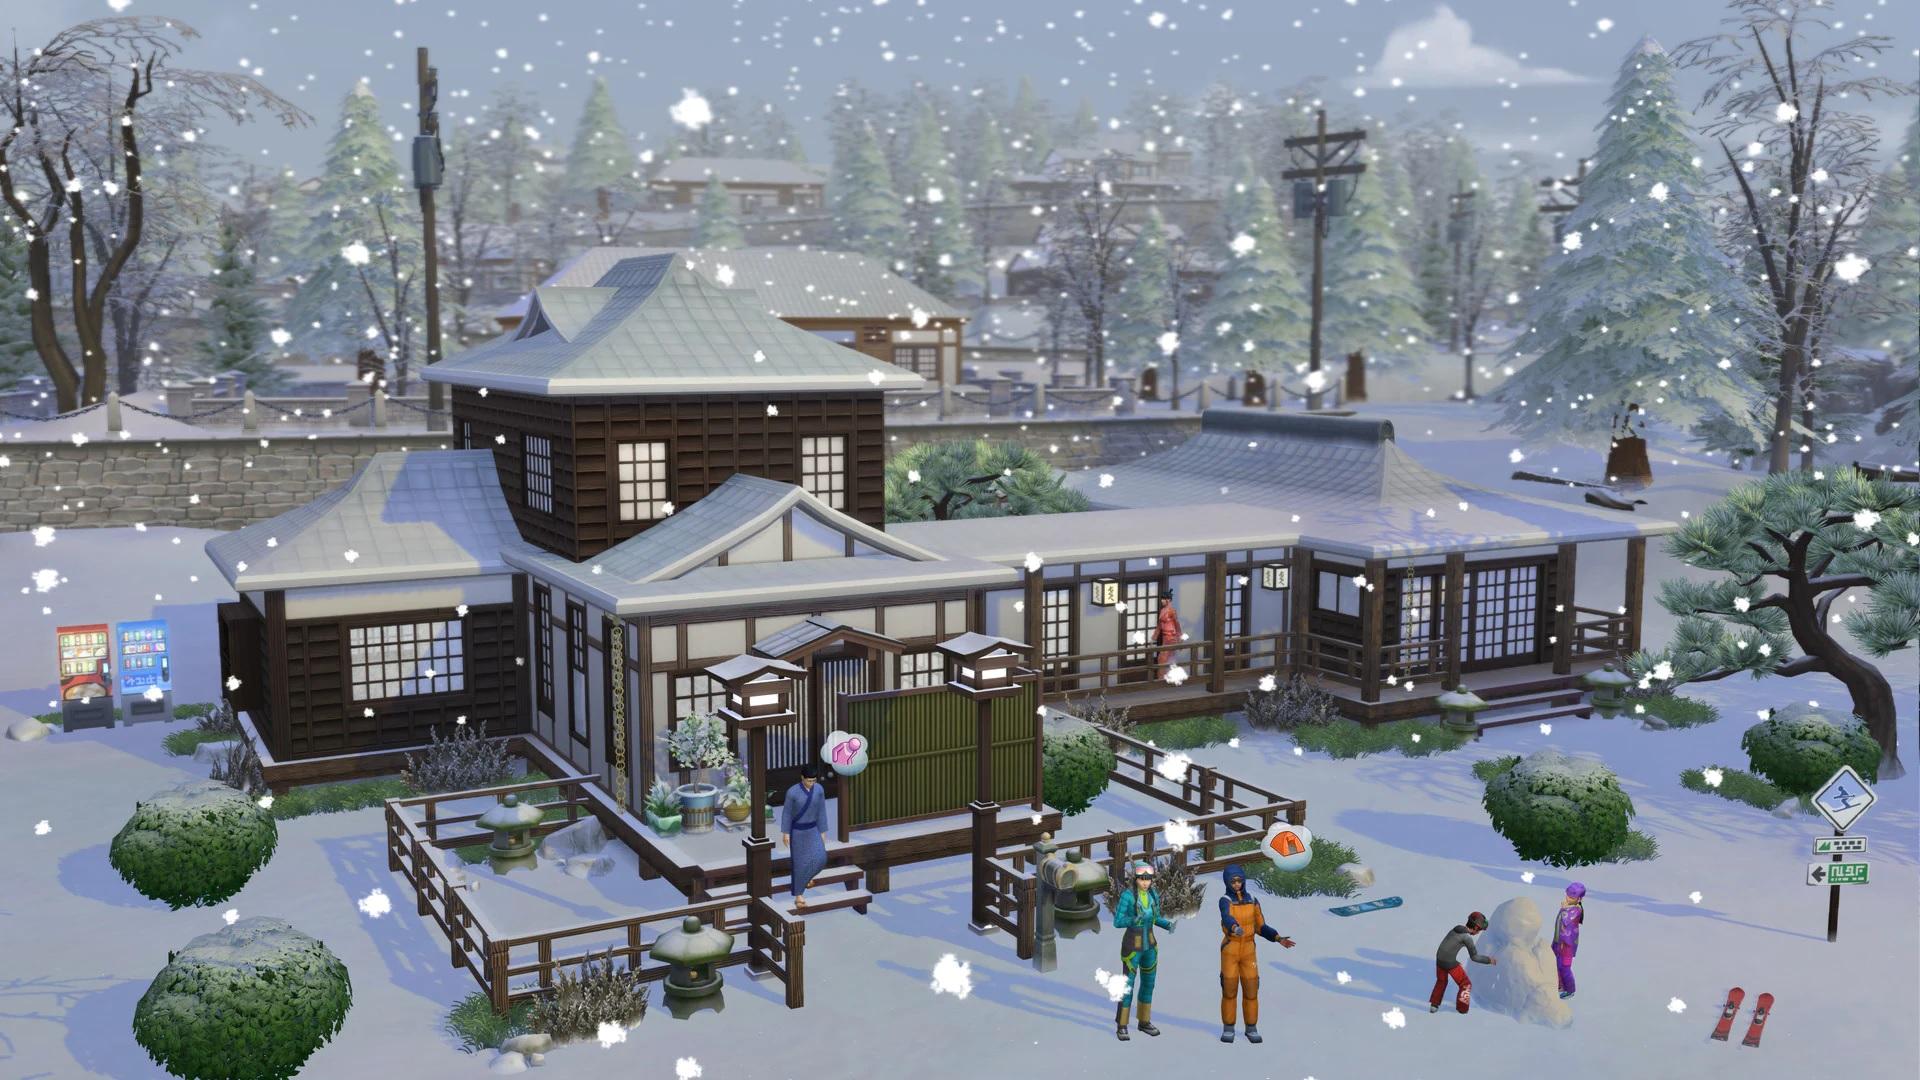 Obrázok z hry The Sims 4: Snowy Escape.